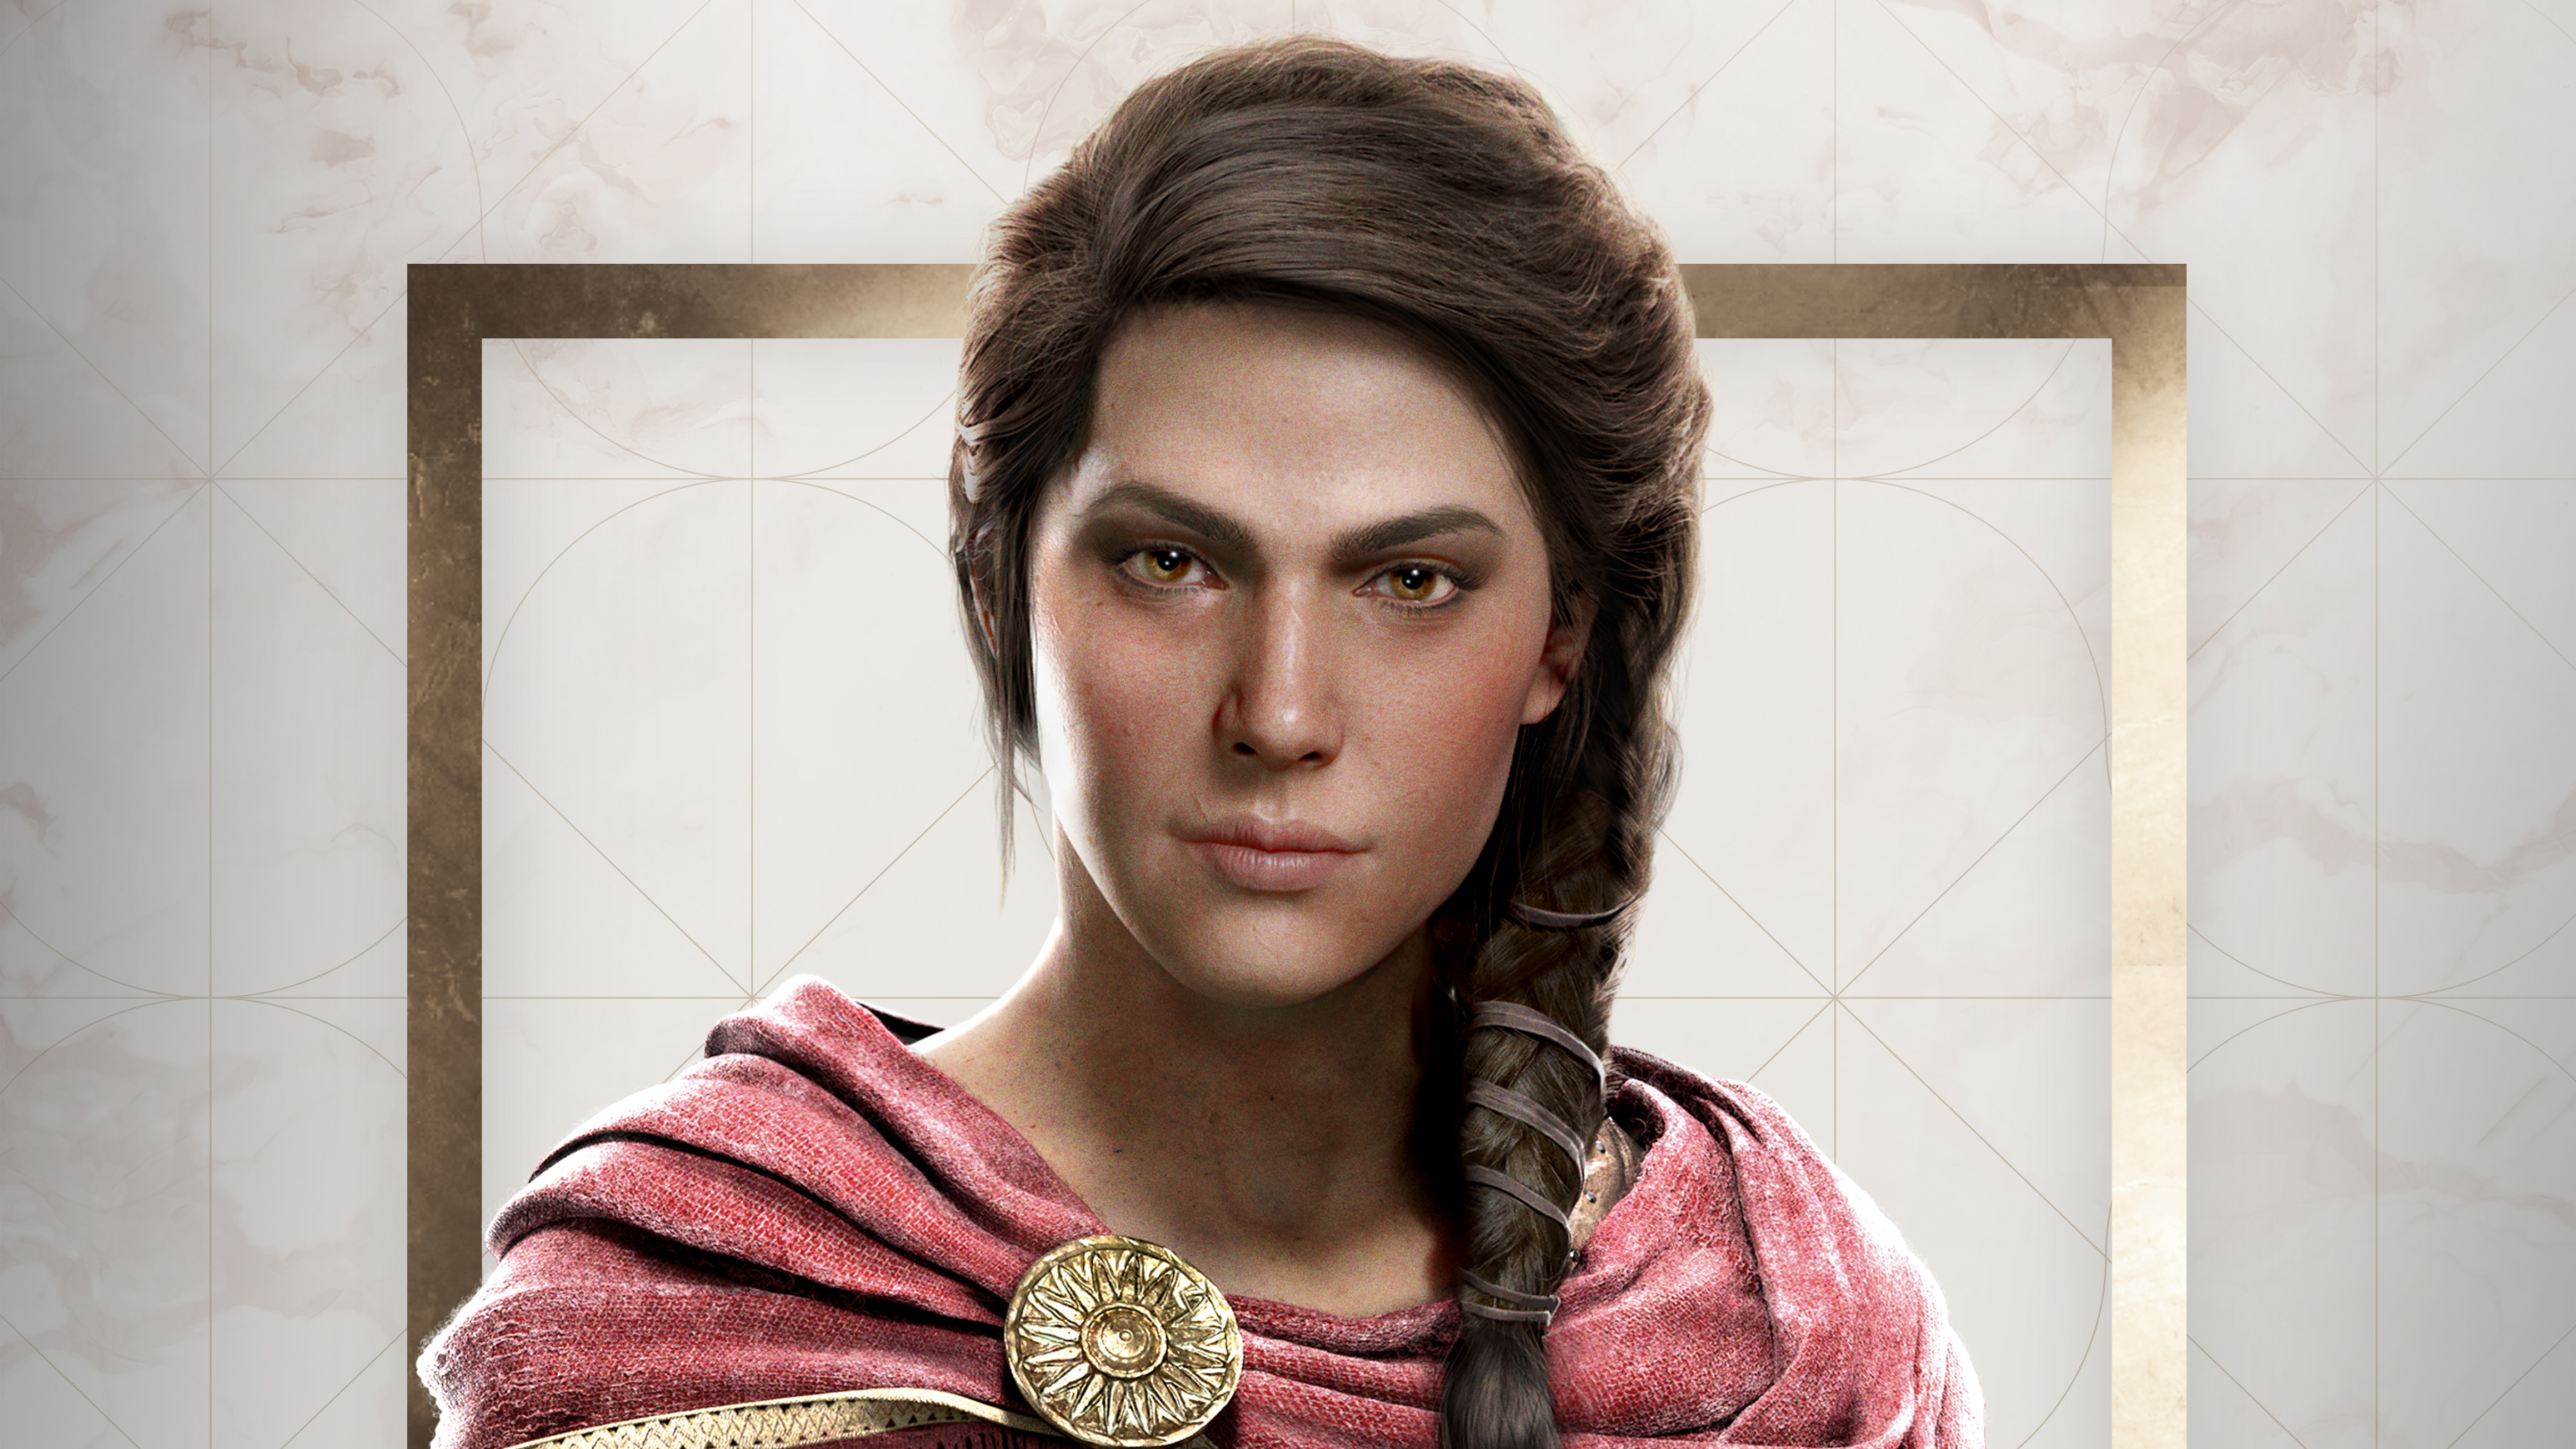 Kassandra Assassins Creed Odyssey 4k Hd Games 4k Wallpapers Images 7215